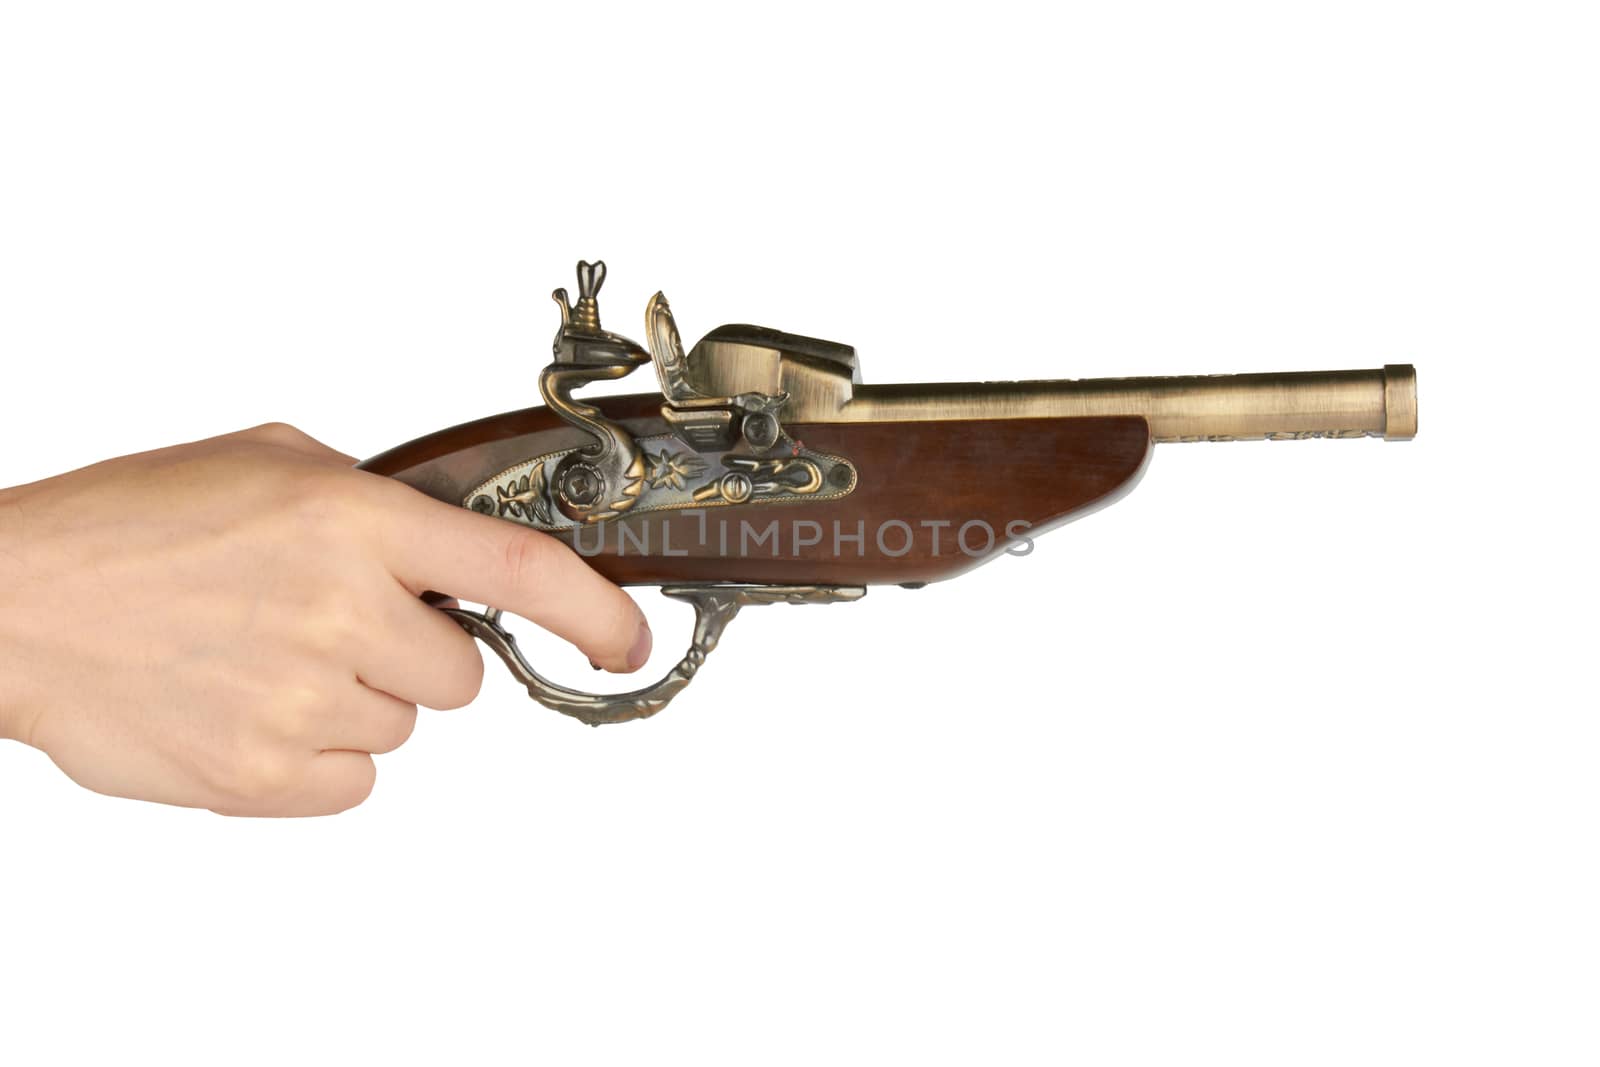  pistol by pioneer111